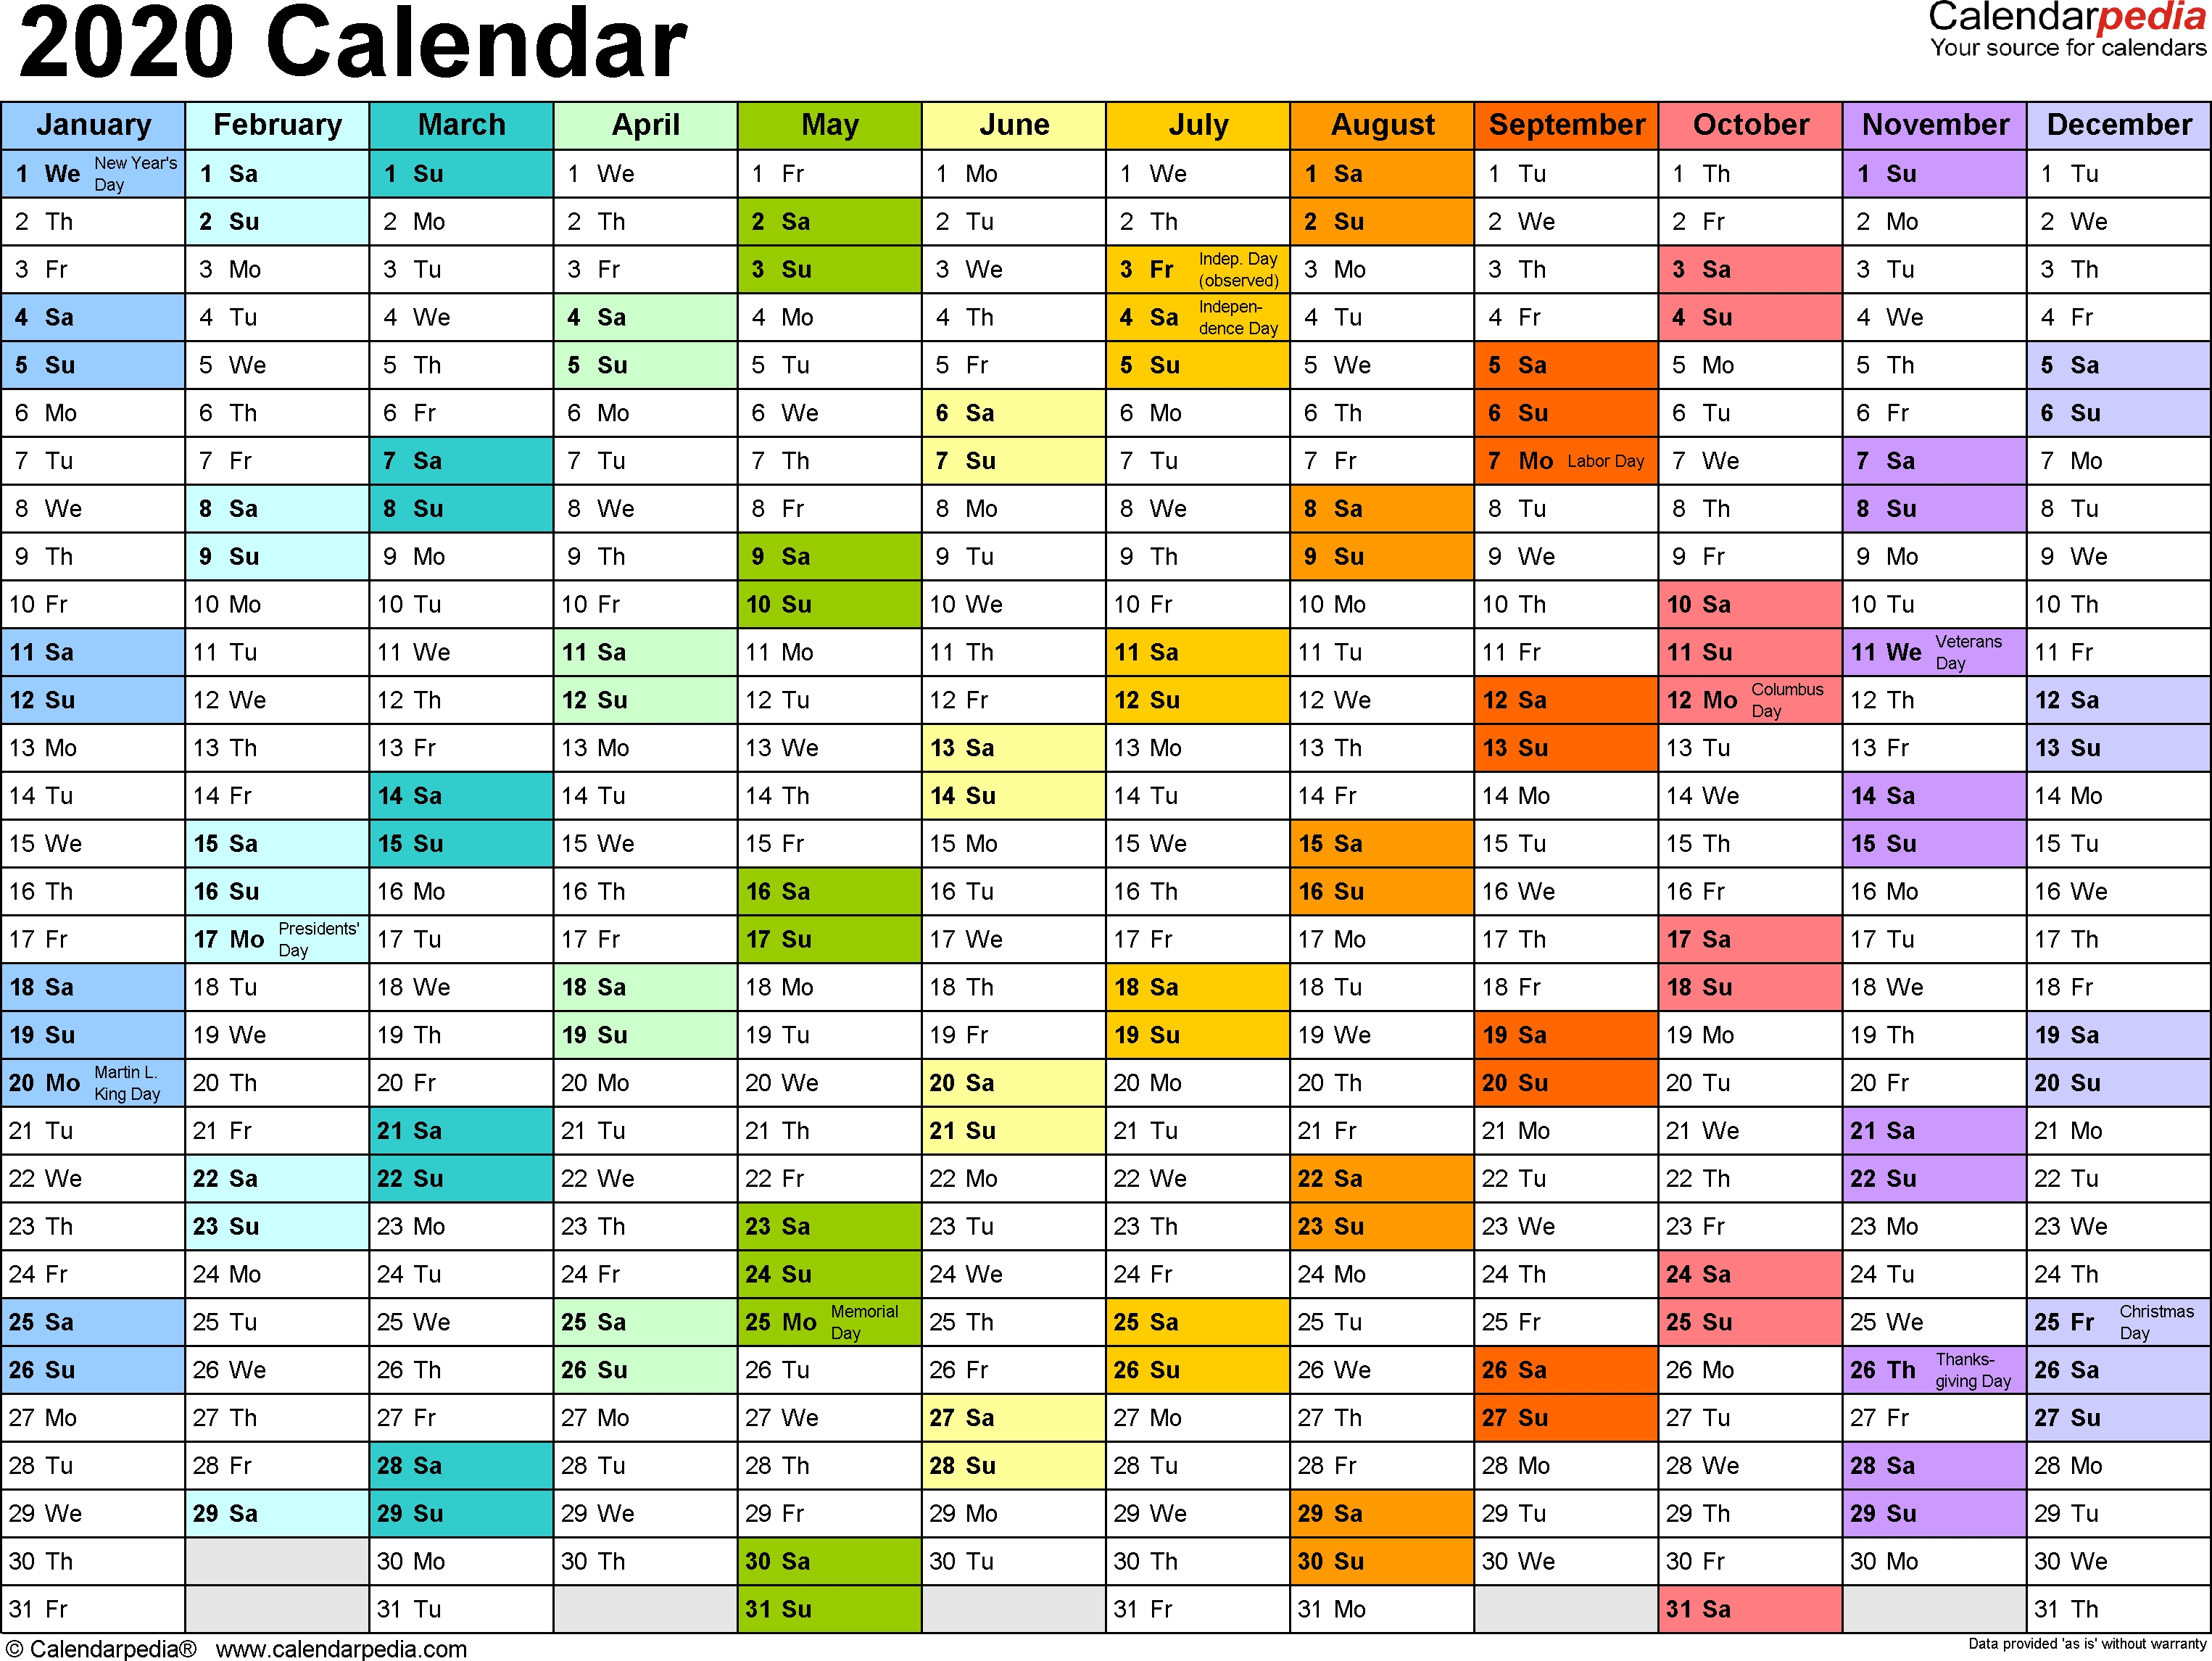 Calendarpedia - Your Source For Calendars Calendarpedia 2020 For South Africa